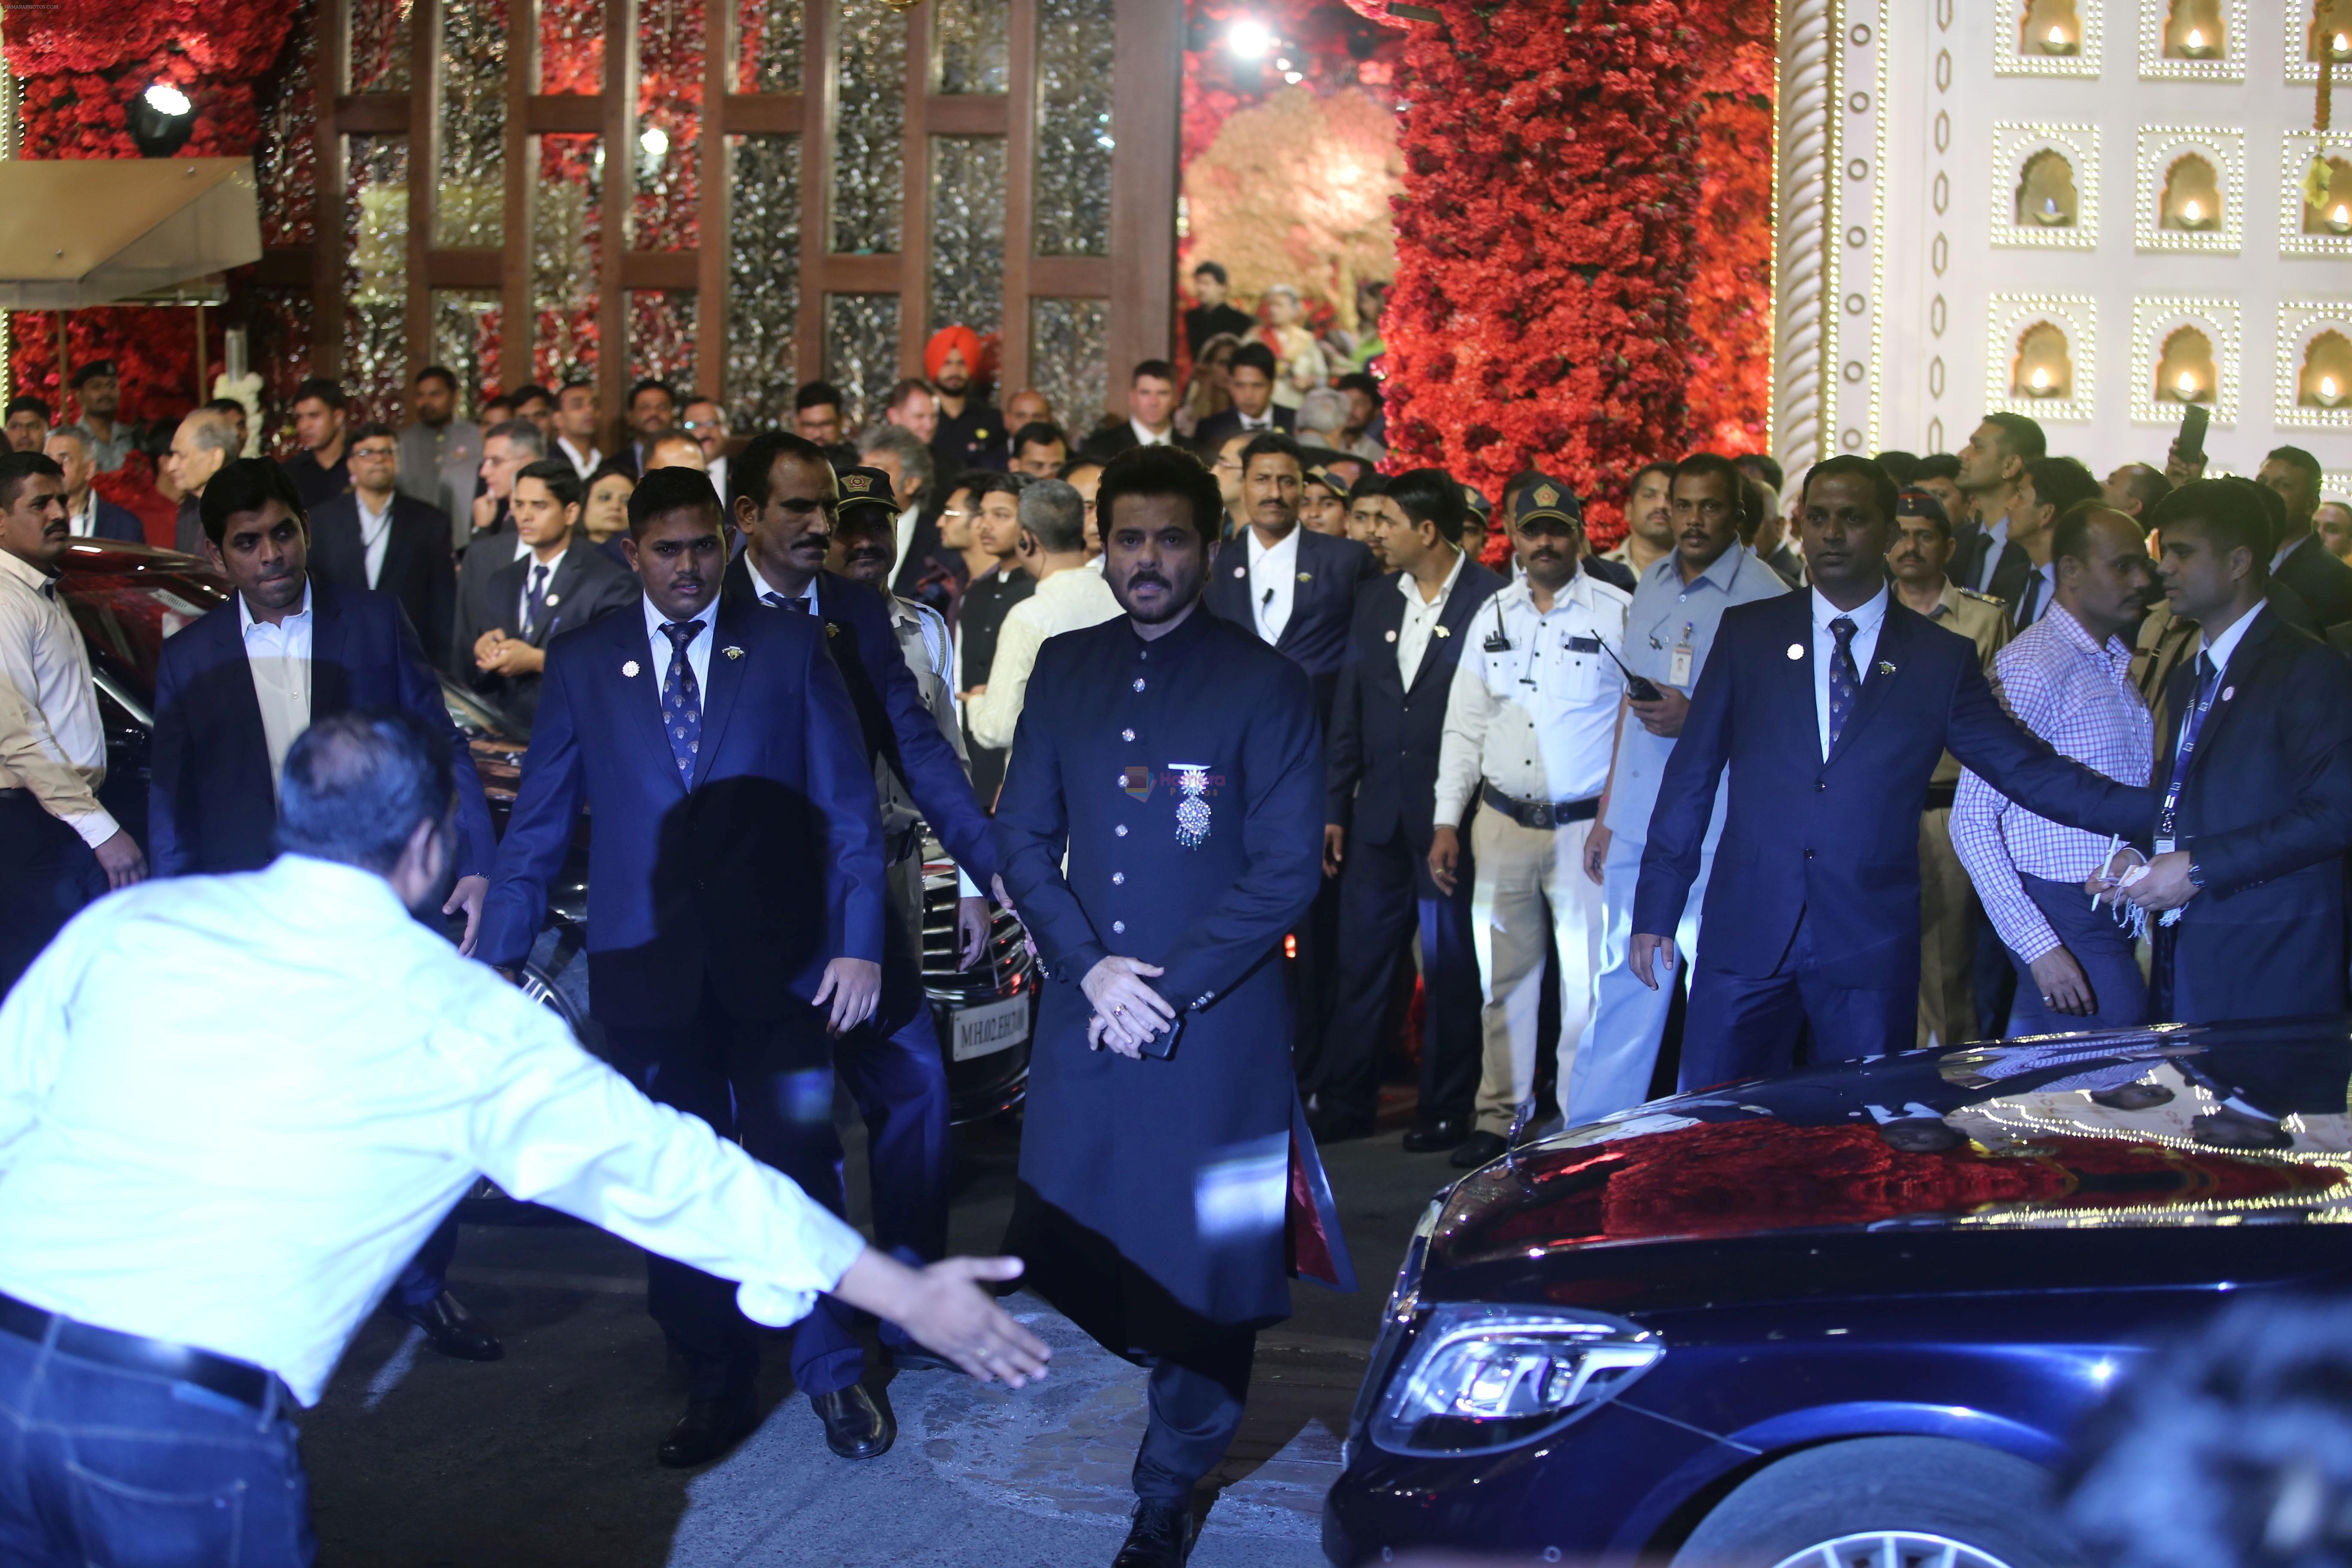 Anil Kapoor at Isha Ambani and Anand Piramal's wedding on 12th Dec 2018